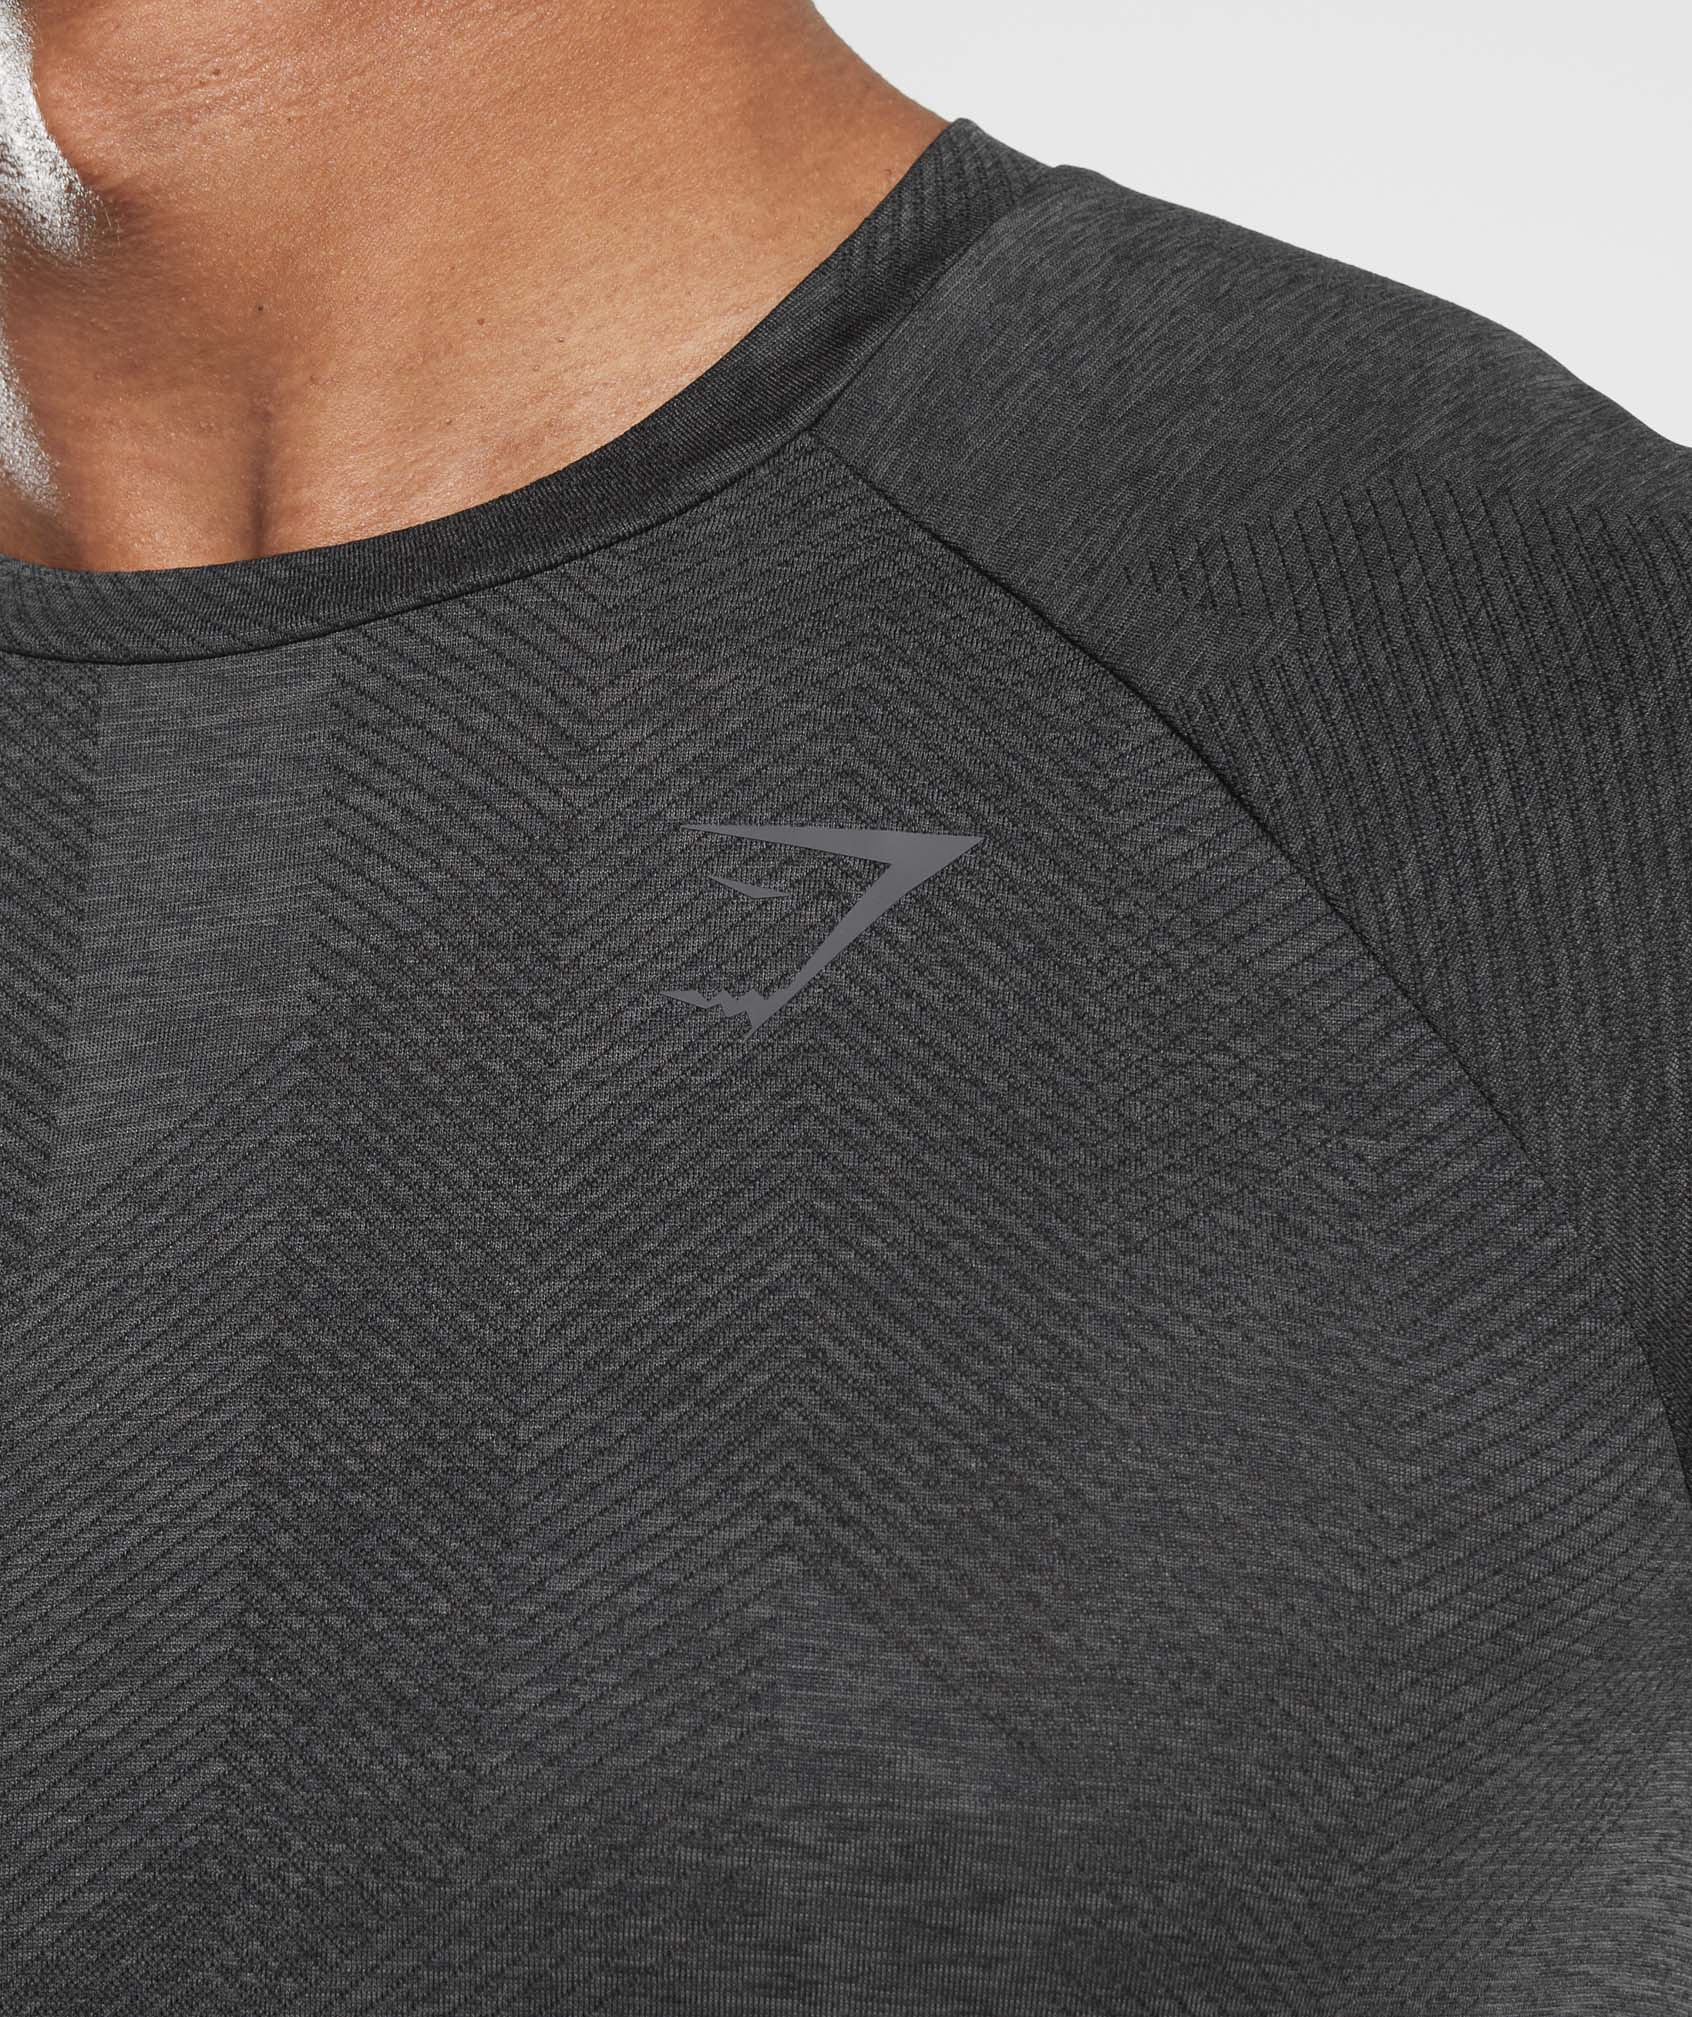 Apex T-Shirt in Black/Onyx Grey - view 6